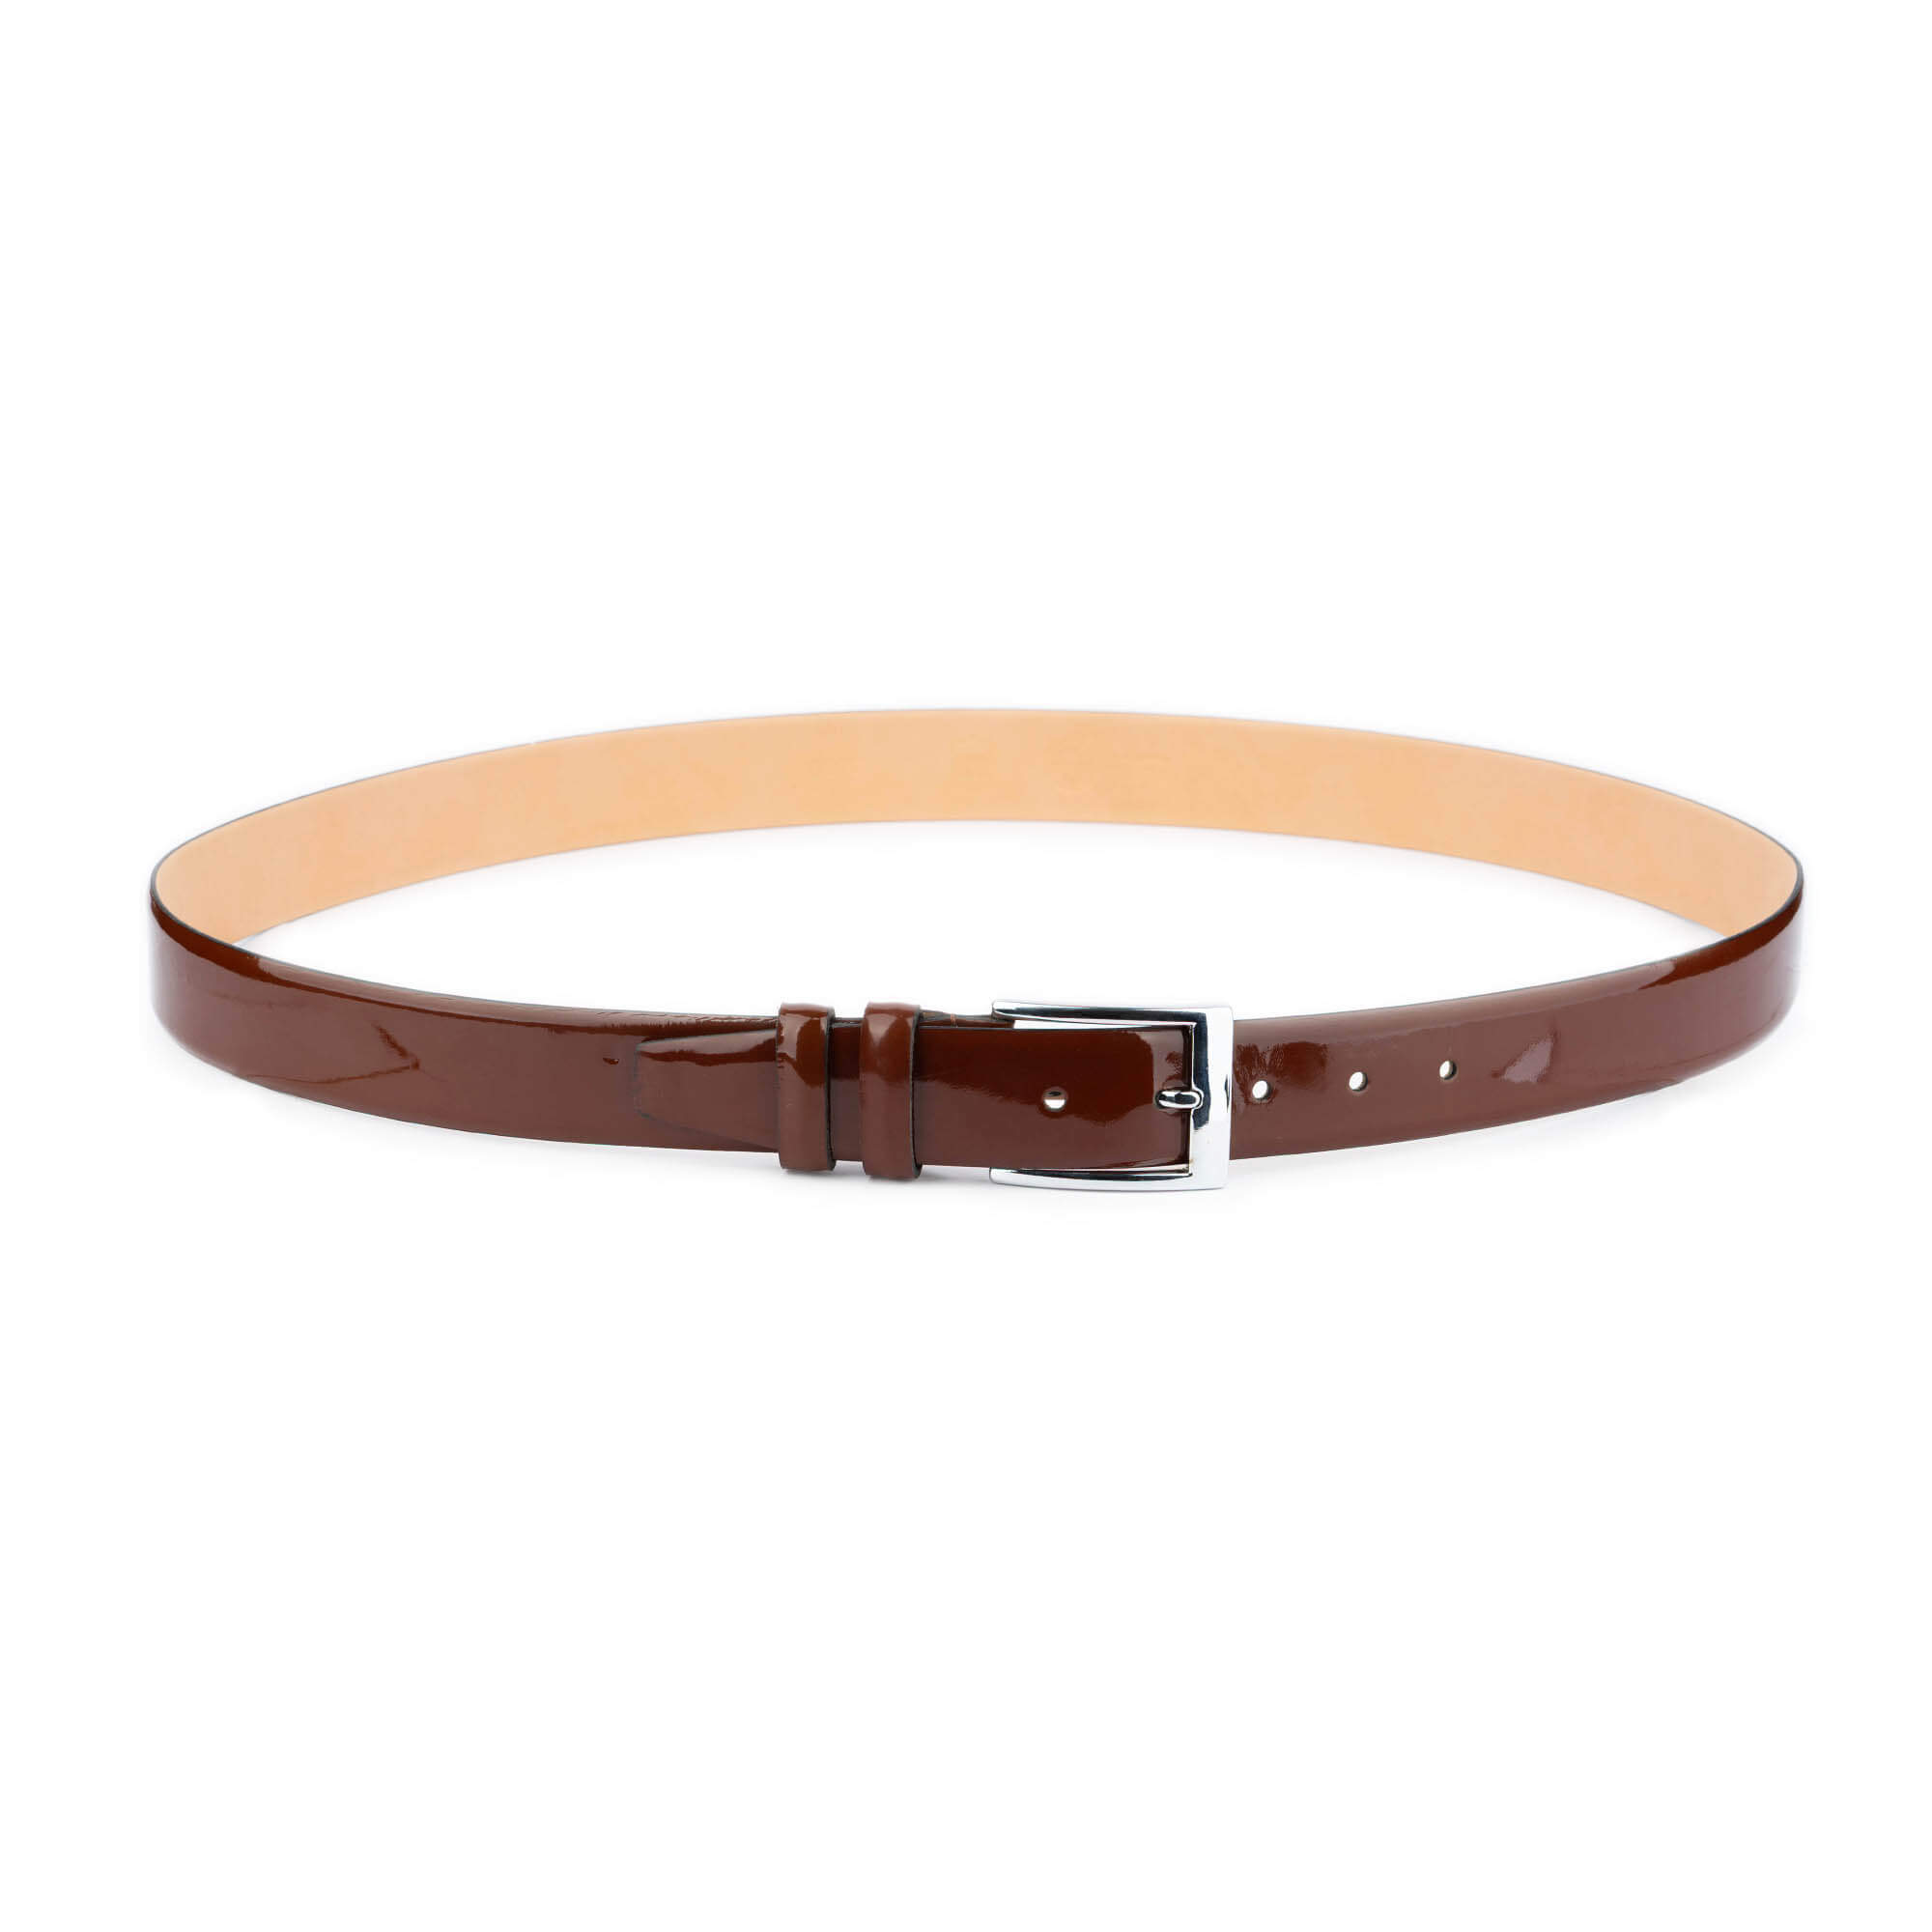 Buy Mens Brown Patent Leather Belt - Dress Luxury - LeatherBeltsOnline.com